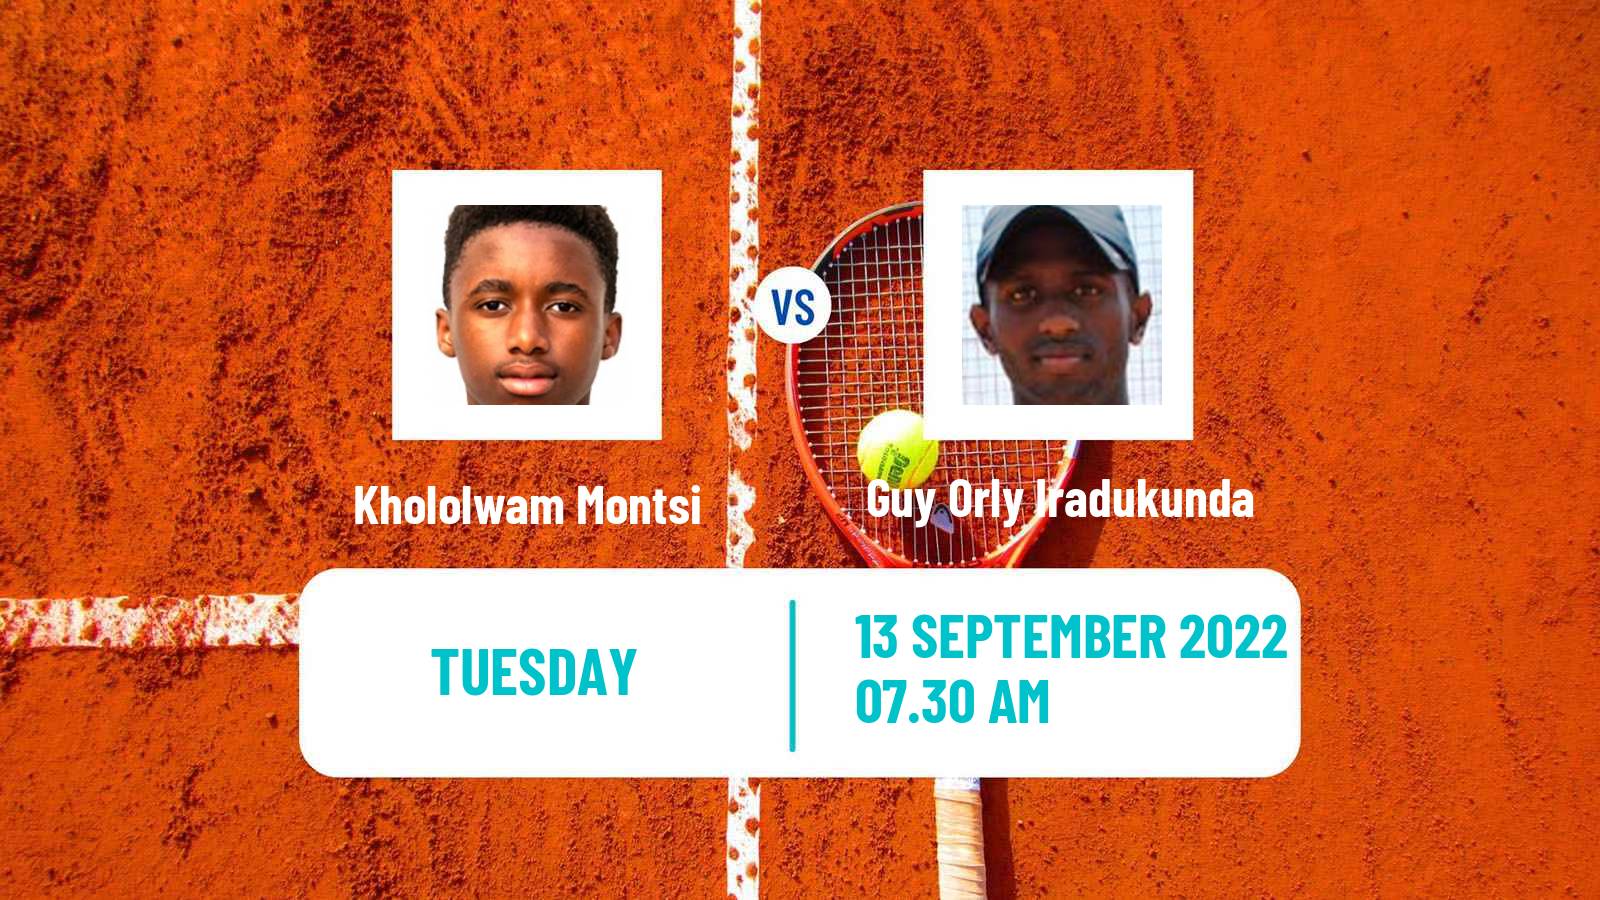 Tennis ITF Tournaments Khololwam Montsi - Guy Orly Iradukunda